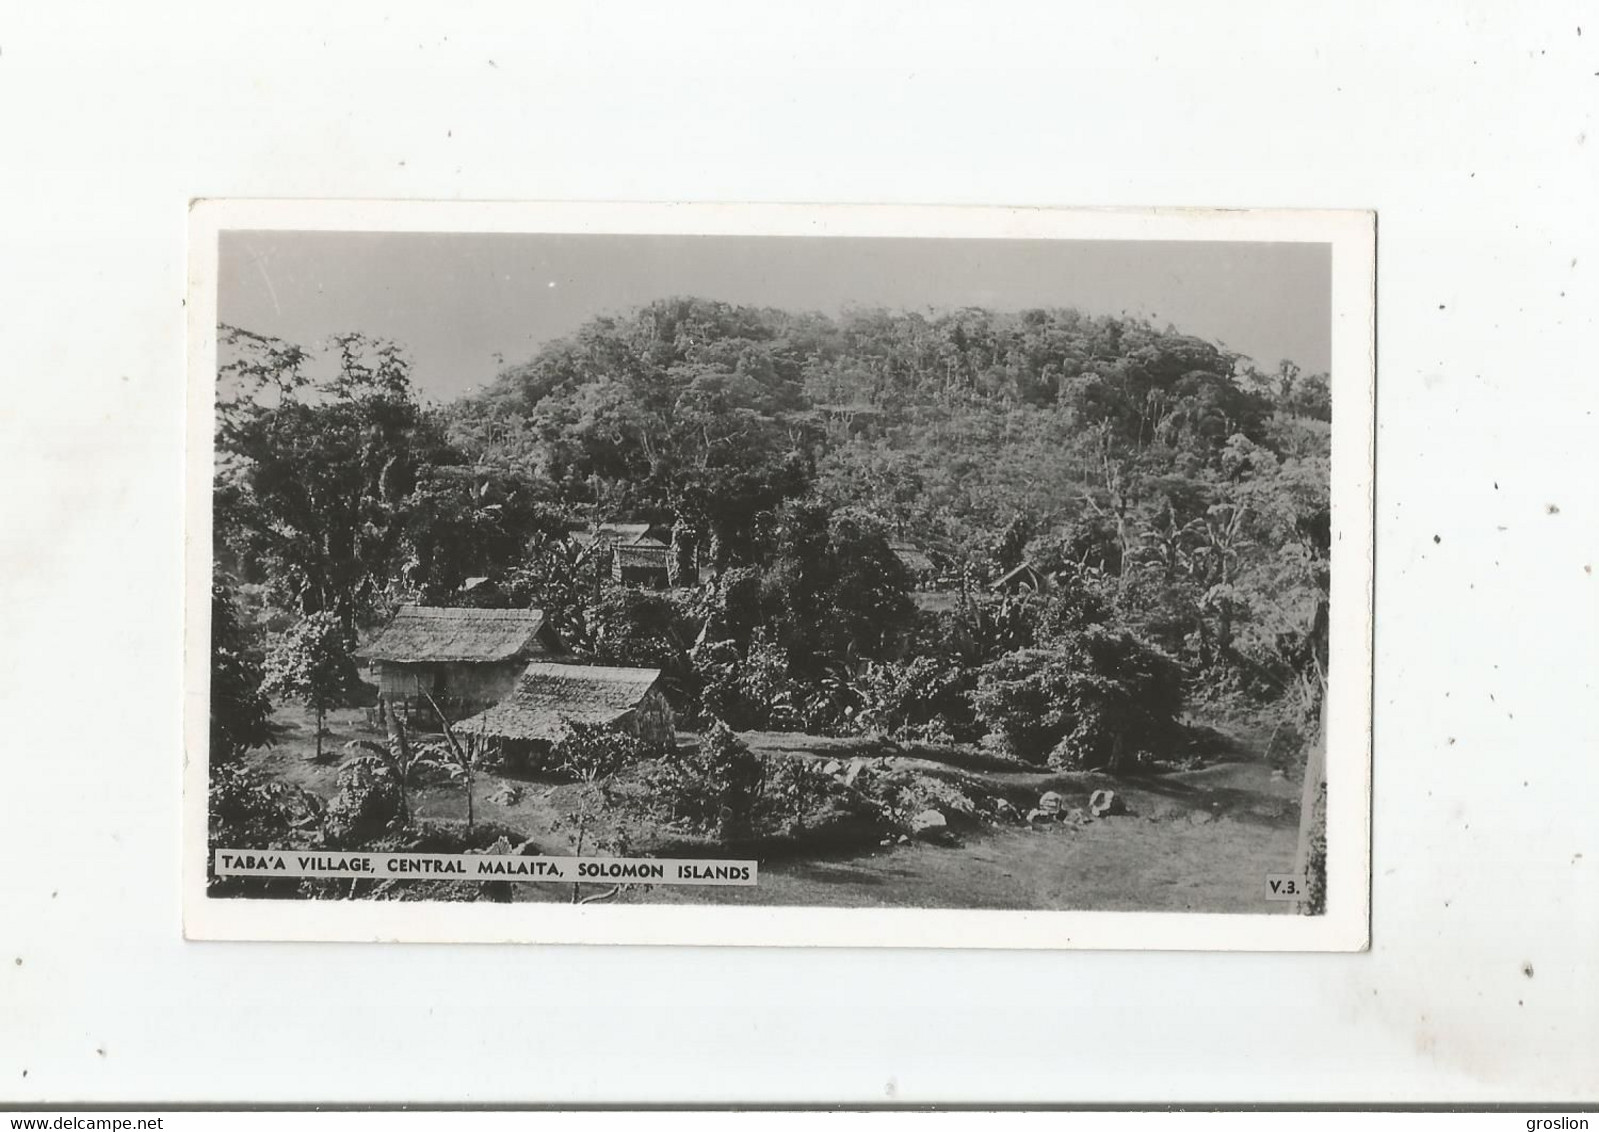 SOLOMON ISLANDS 3 TABA'A VILLAGE CENTRAL MALAITA (TABA VILLAGE  ILE DE MALAITA  ILES SALOMON) - Salomoninseln